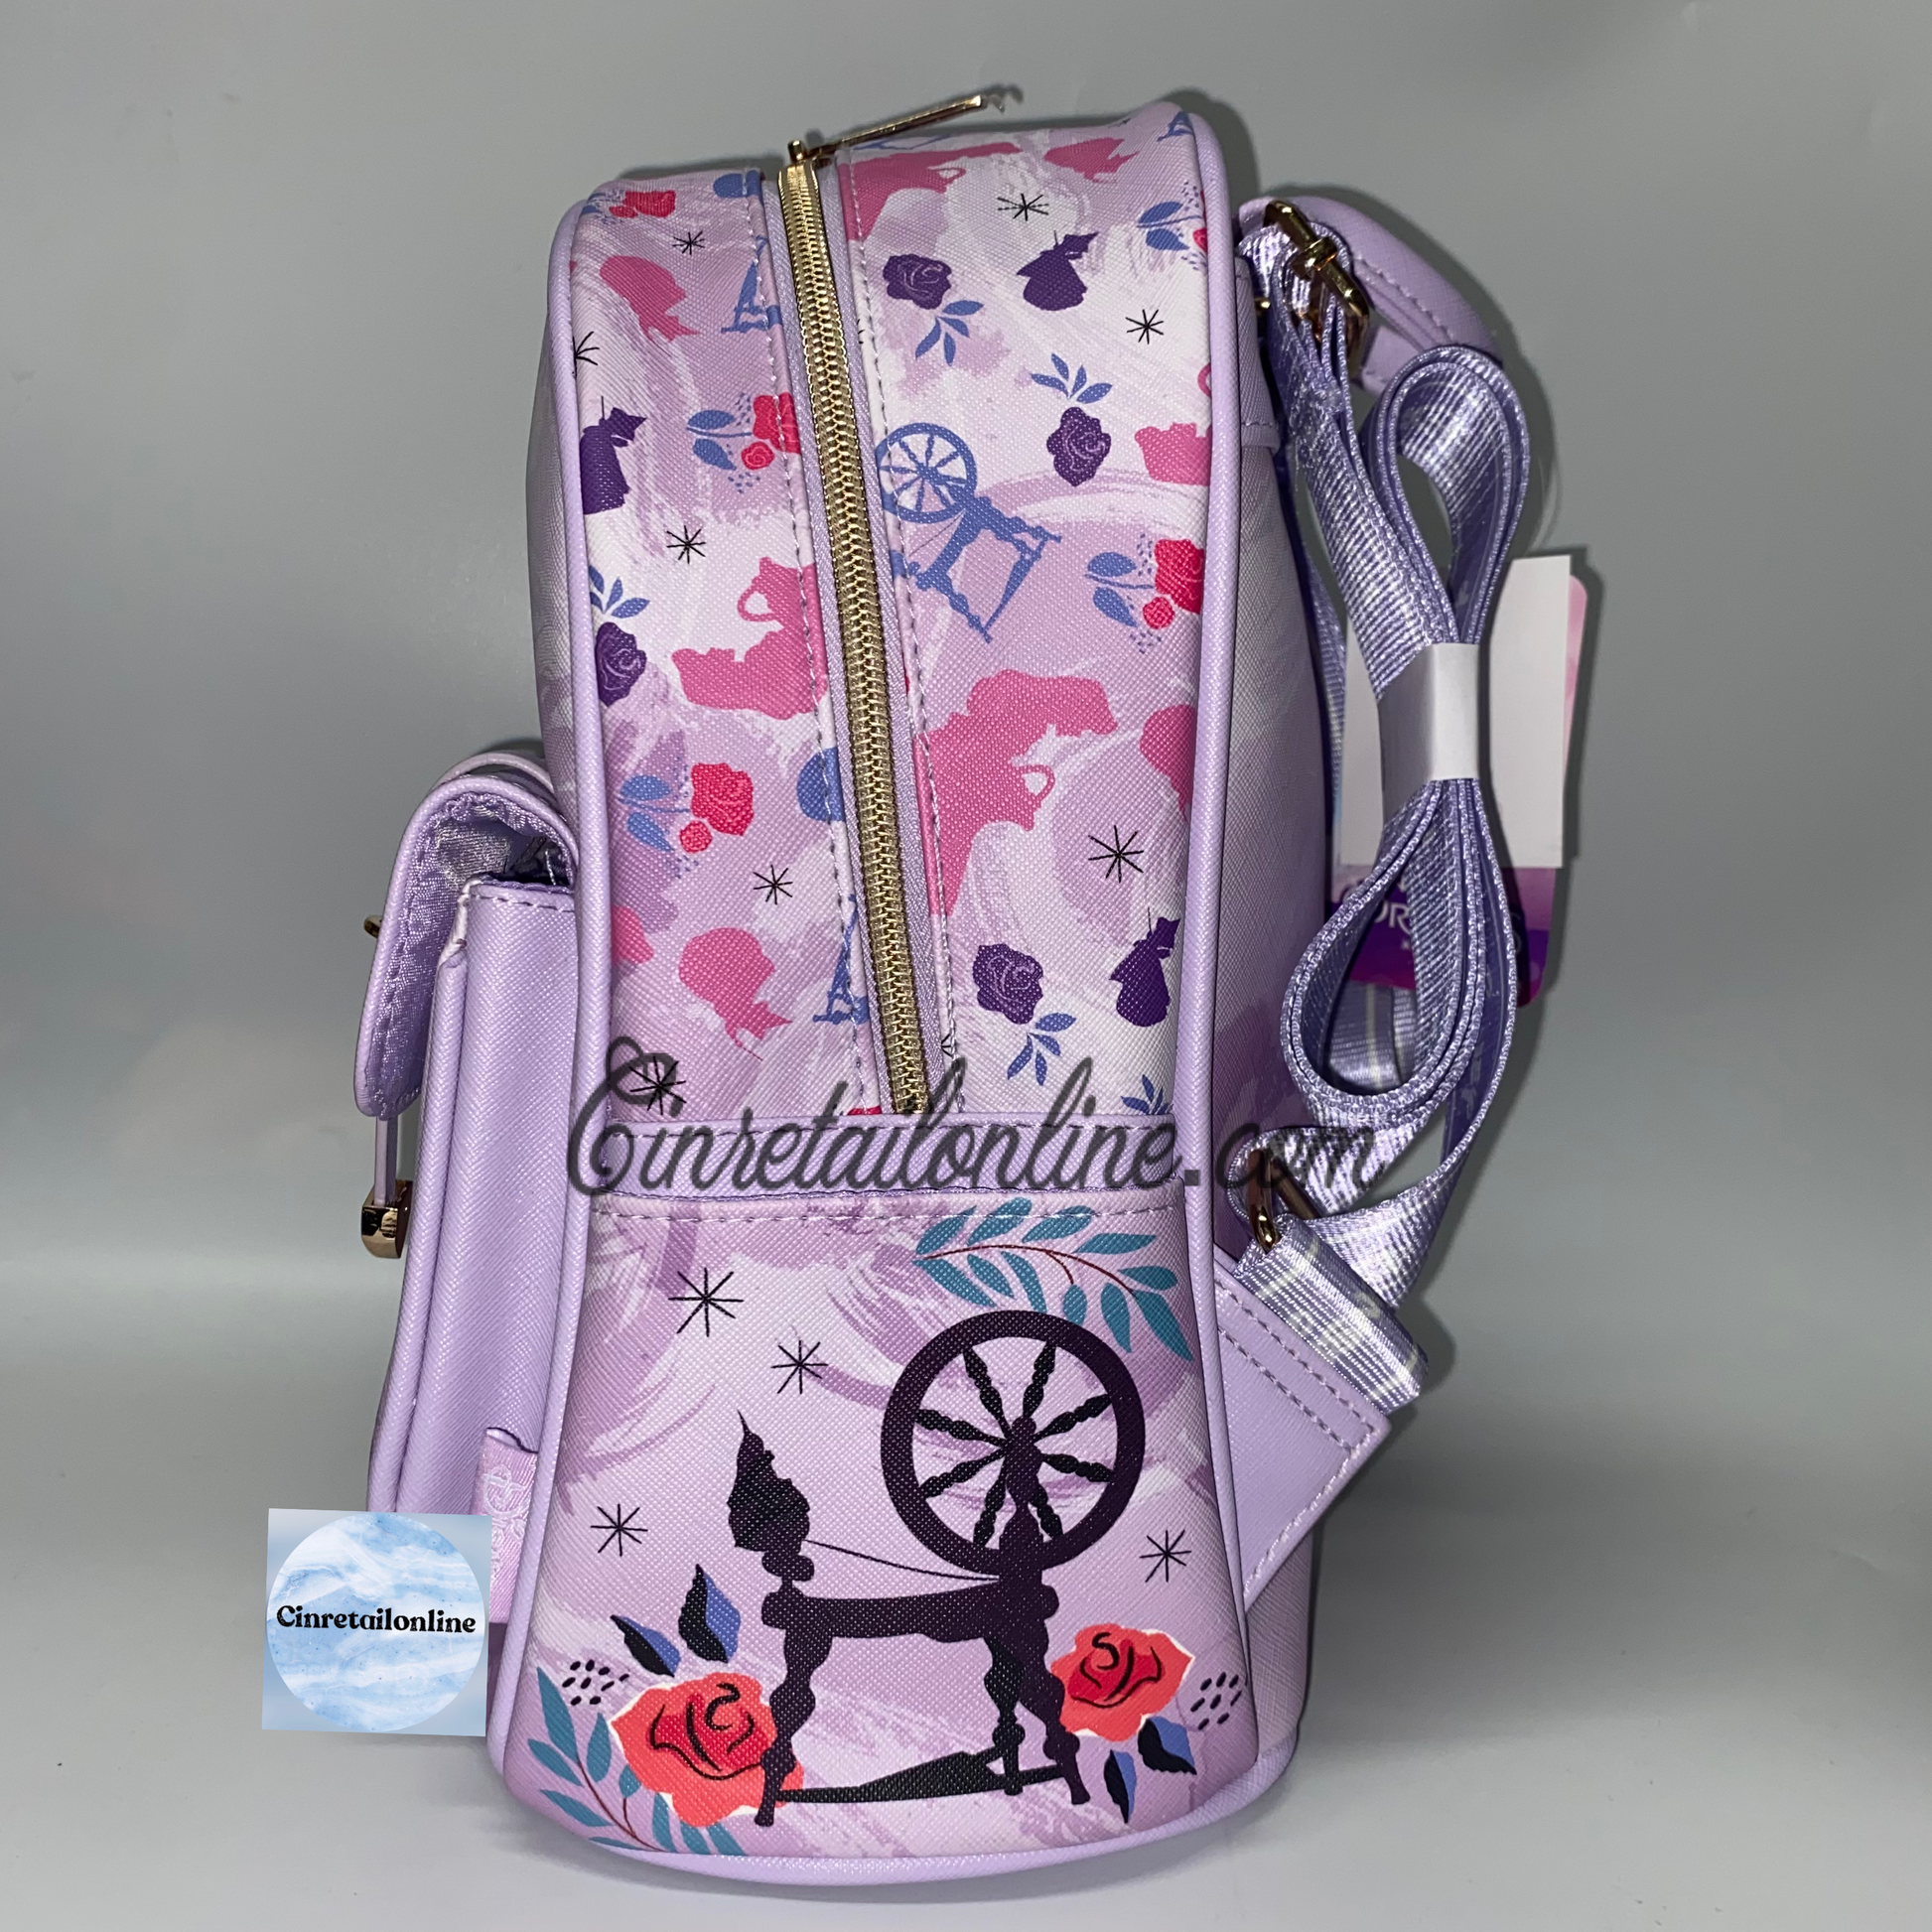 Disney Sleeping Beauty aurora Backpack for Girls 